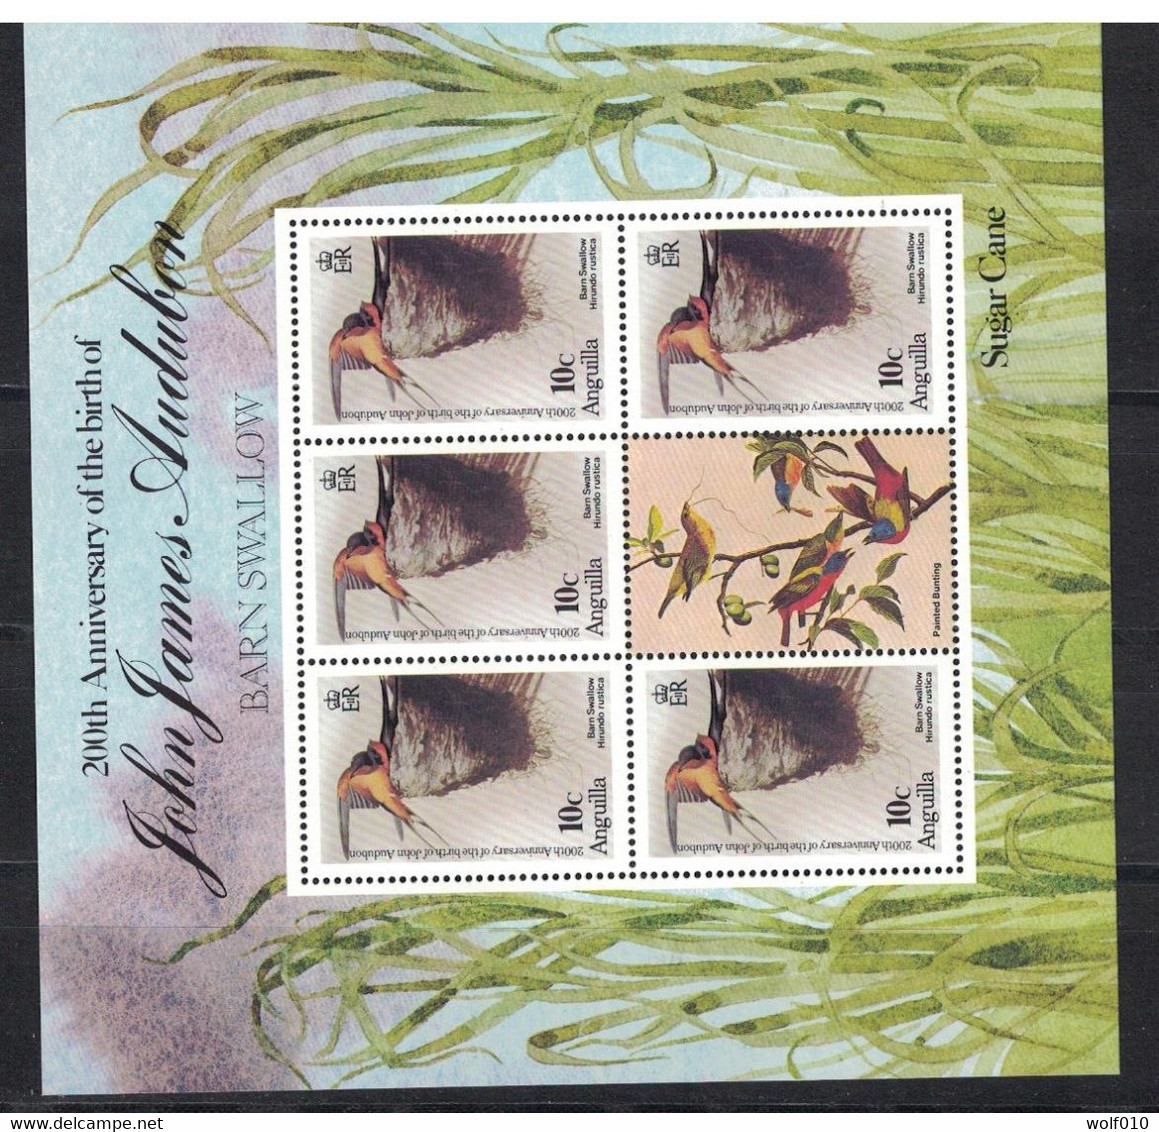 Anguilla. 1985. Barn Swallow. Audubon. MNH Sheet 5 And Label. SCV = 6.25 - Golondrinas